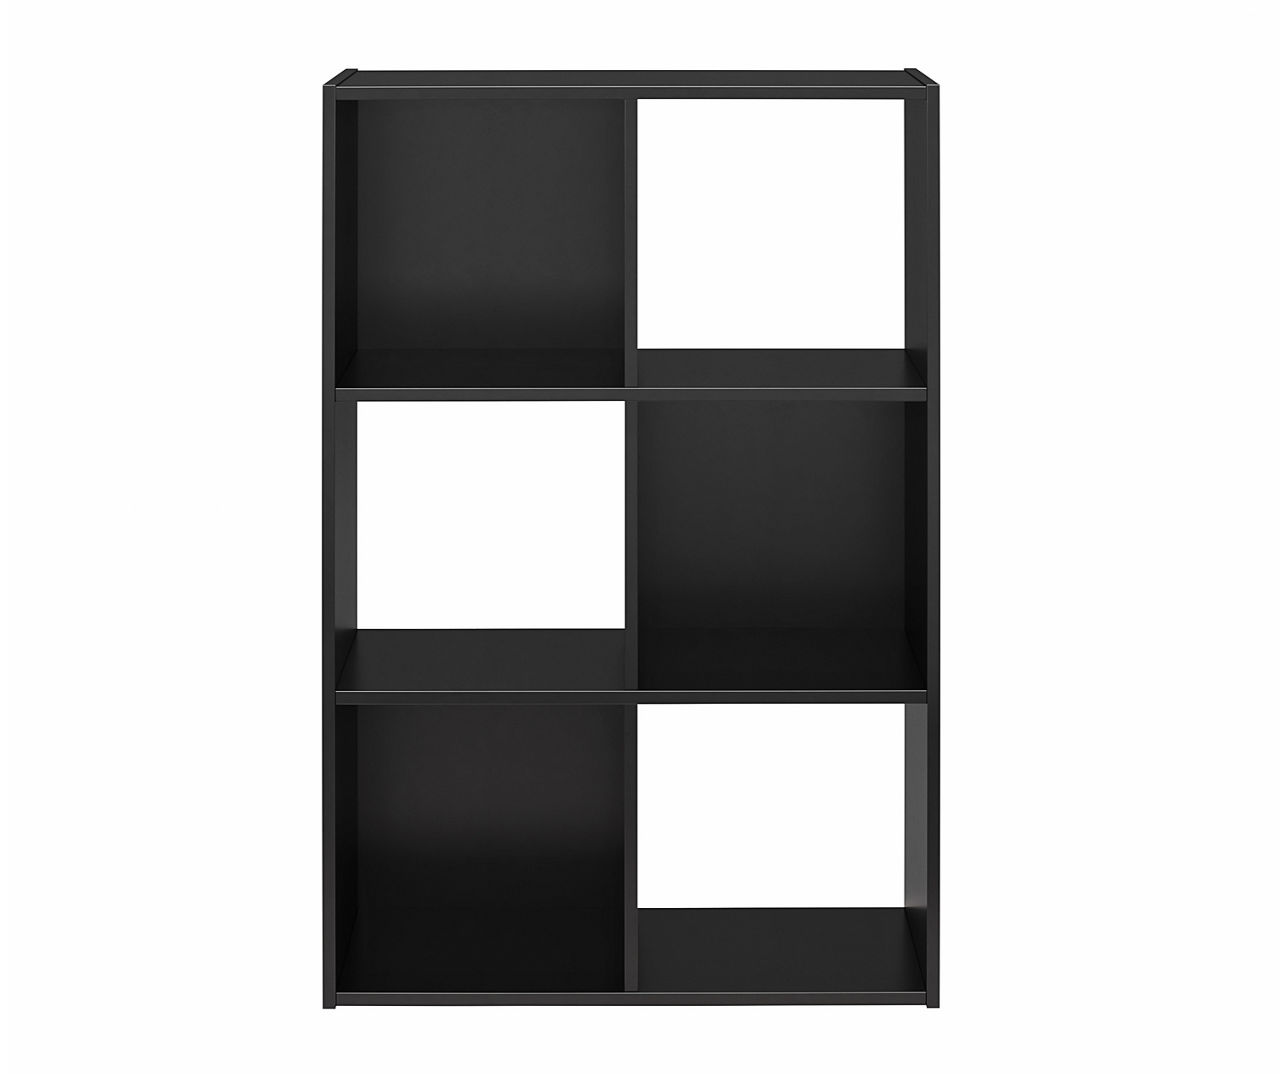 Moda Black 6-Cube Storage Organizer